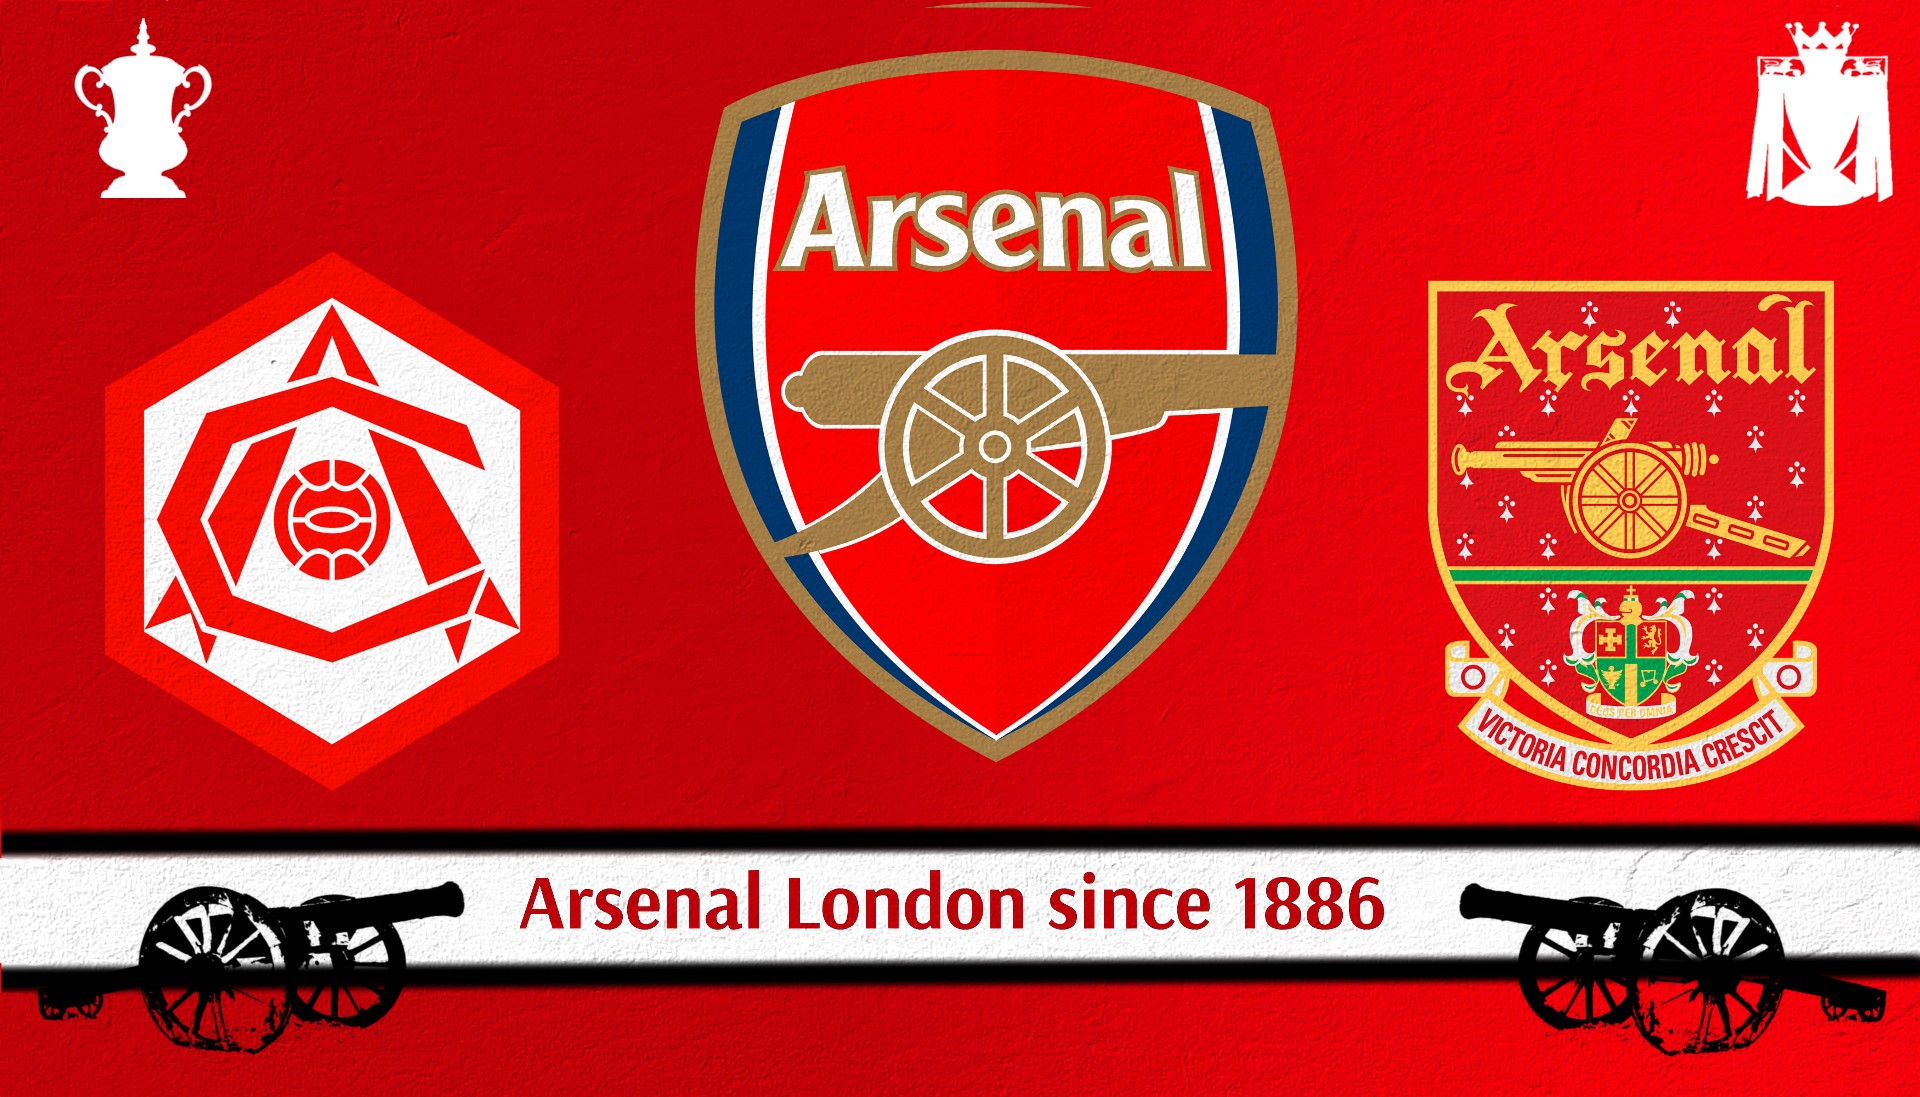 General 1920x1097 Arsenal FC Arsenal London London history logo soccer clubs